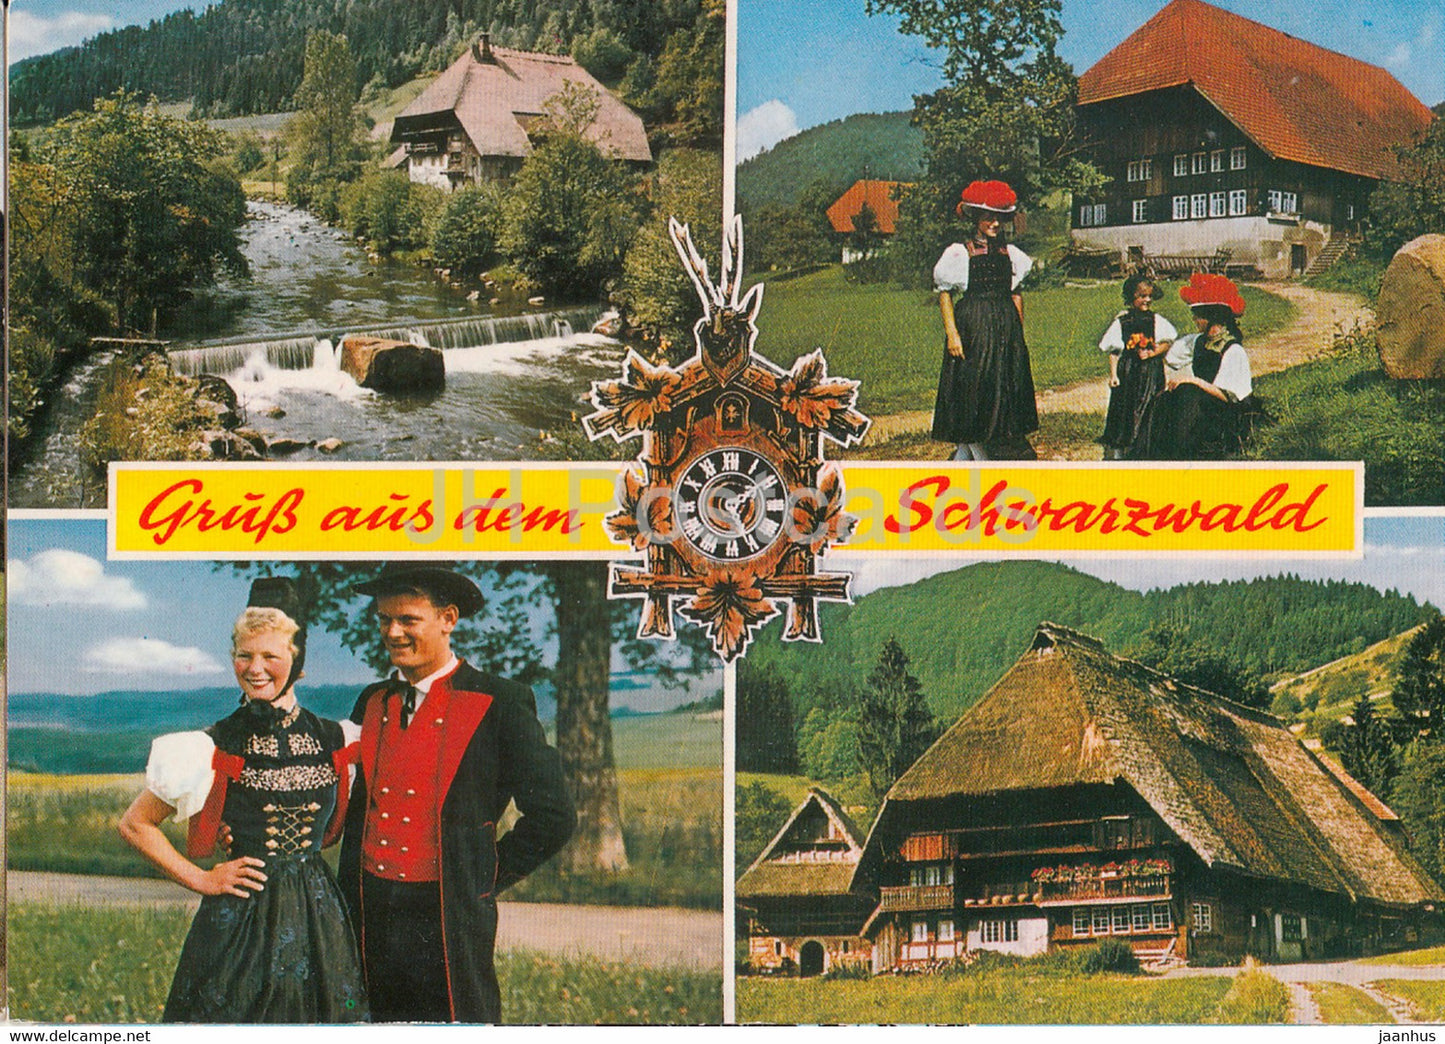 Gruss aus dem Schwarzwald - Trachten - clock - folk costumes - 1984 - Germany - used - JH Postcards